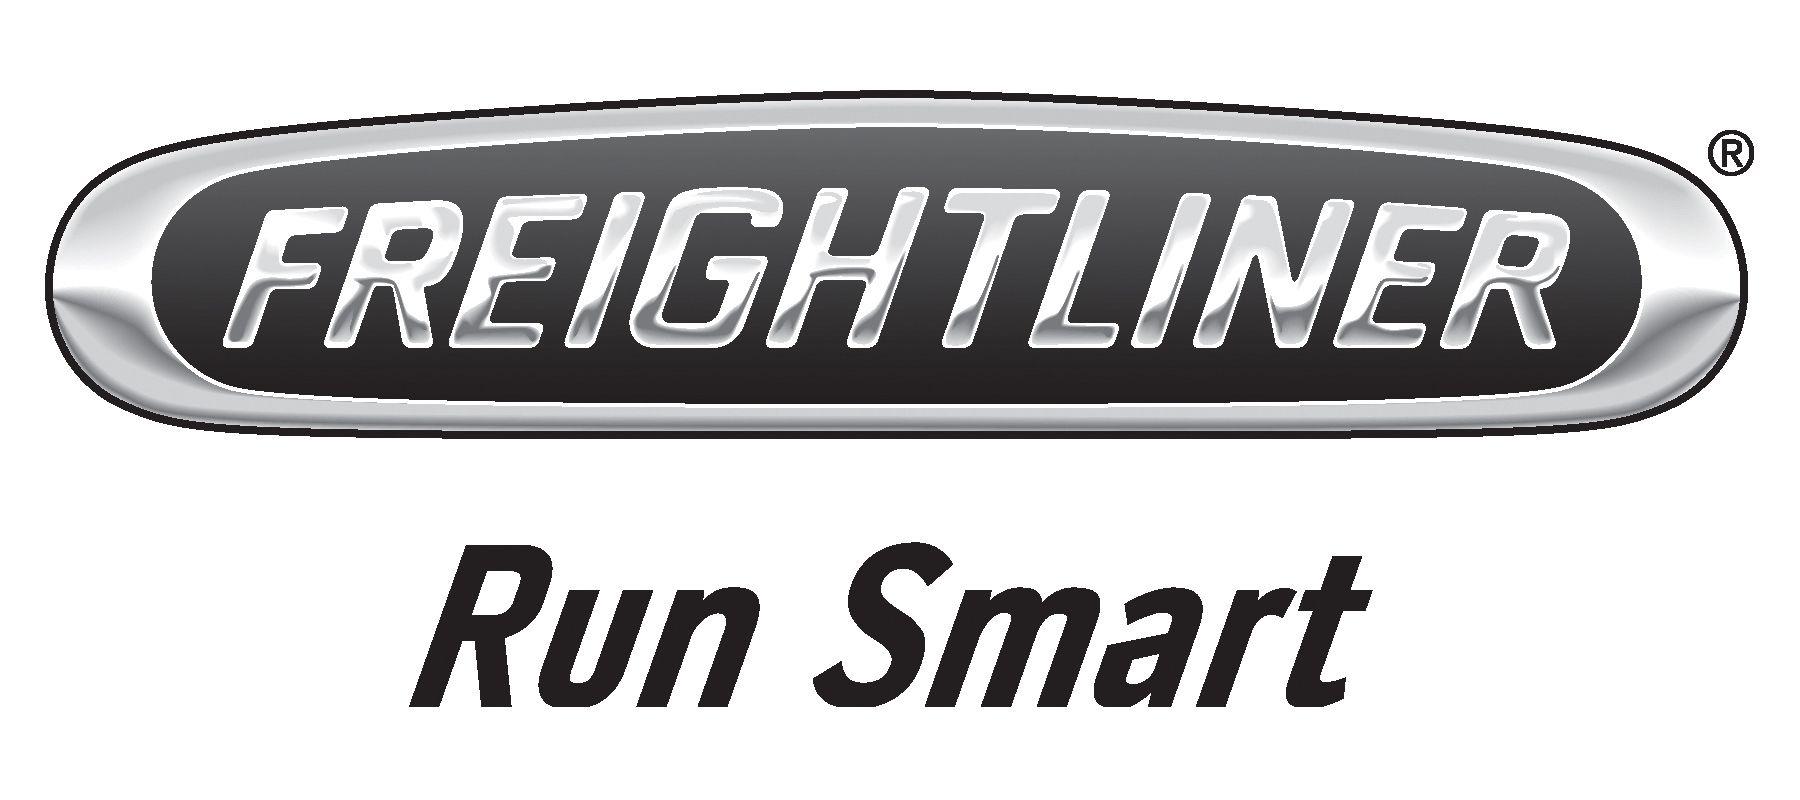 Freightliner Truck Logo - Freightliner brand study considers market trends - Stealing Share